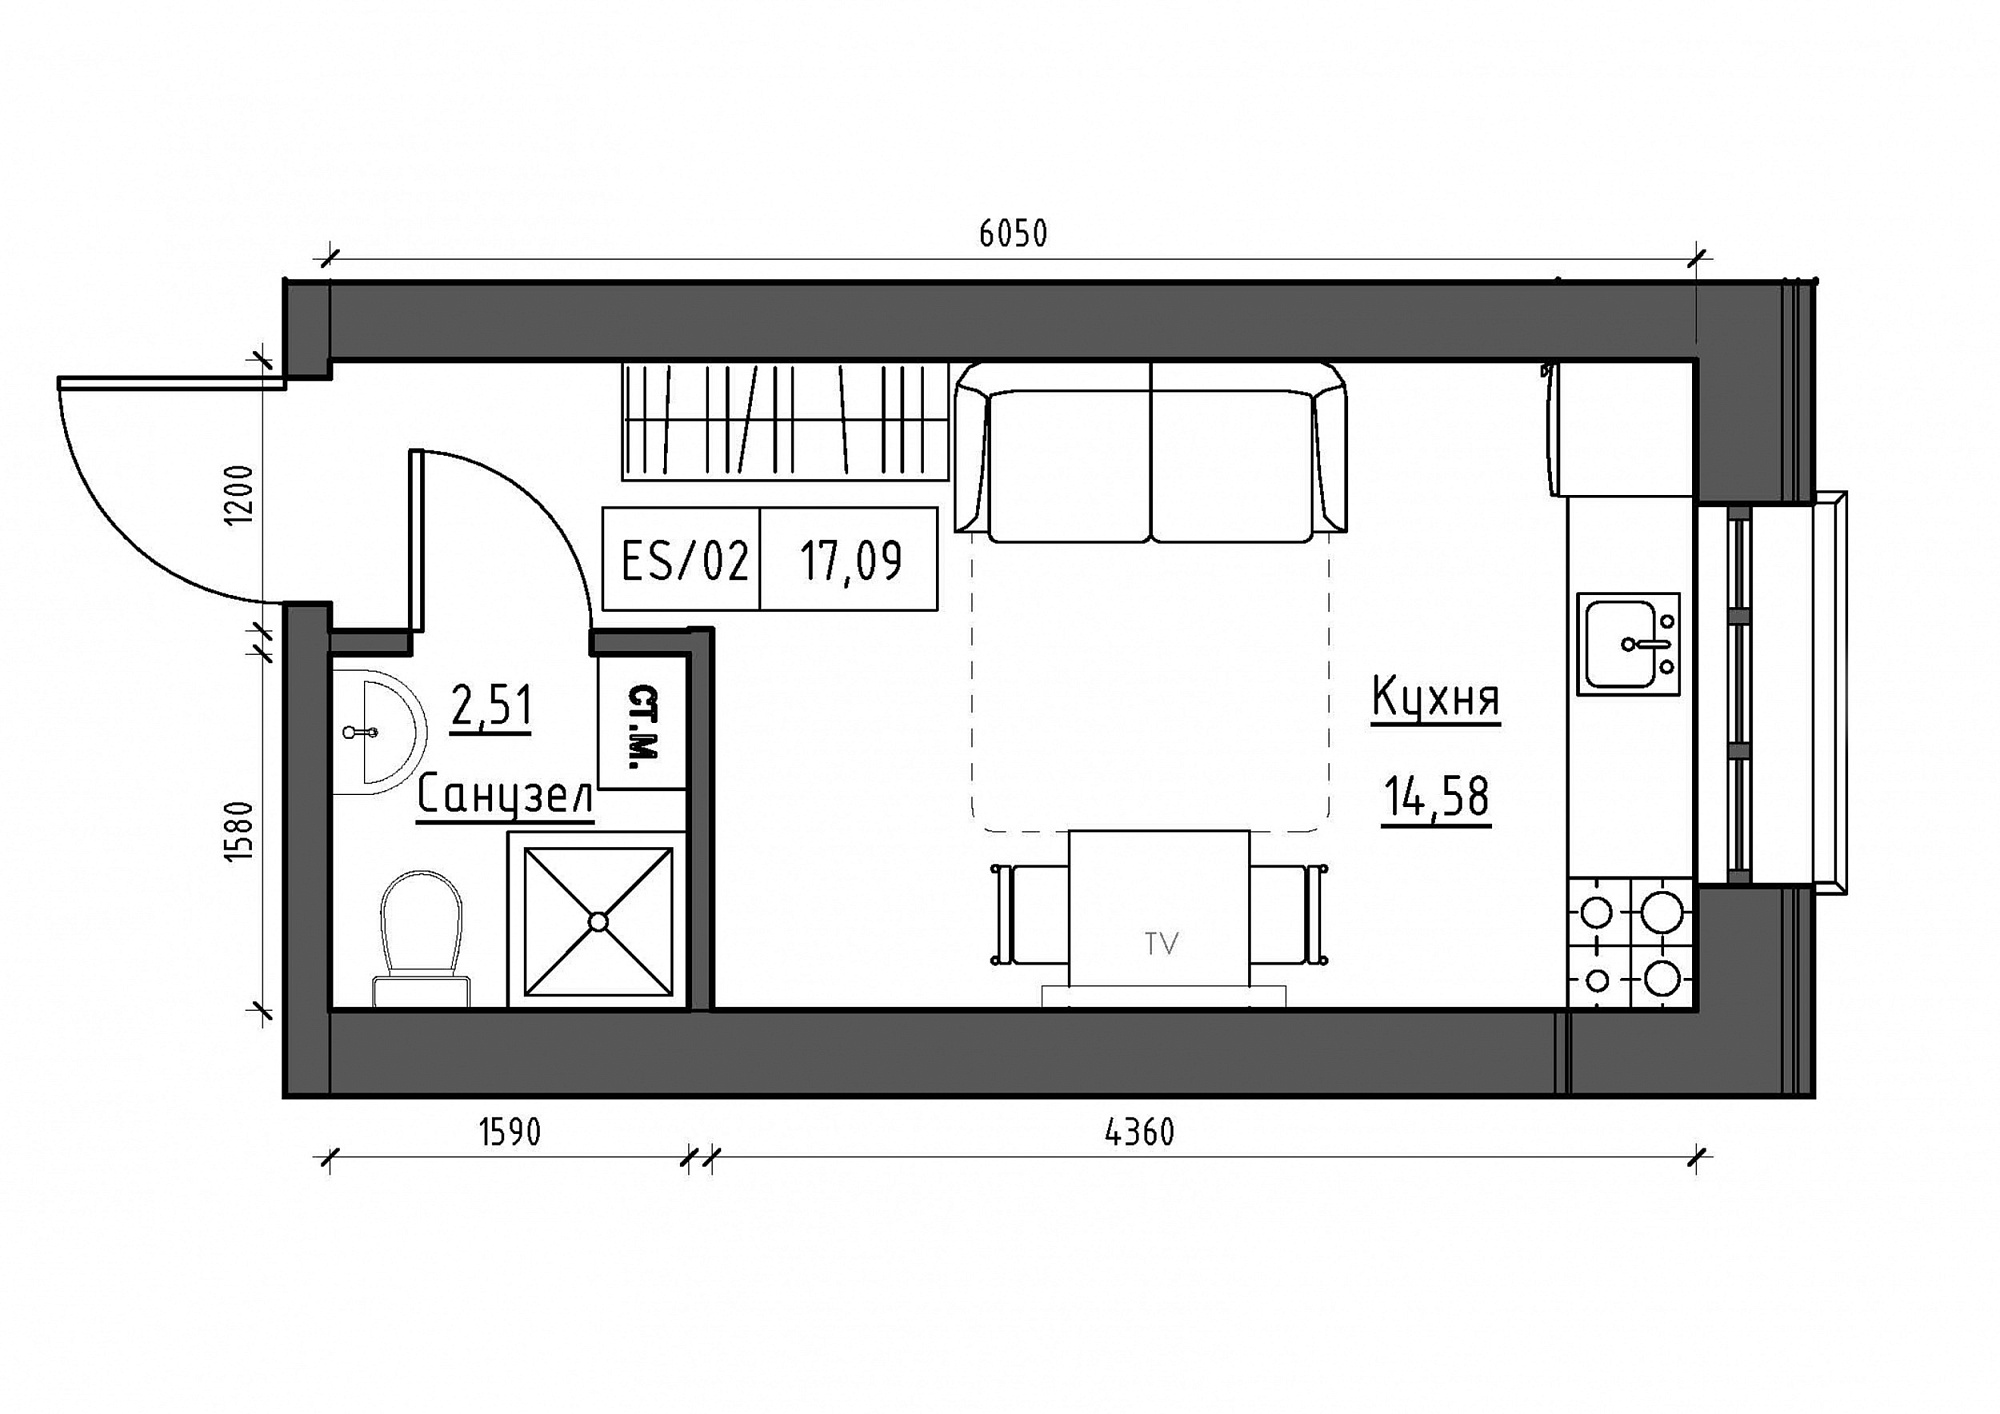 Planning Smart flats area 17.09m2, KS-012-01/0014.